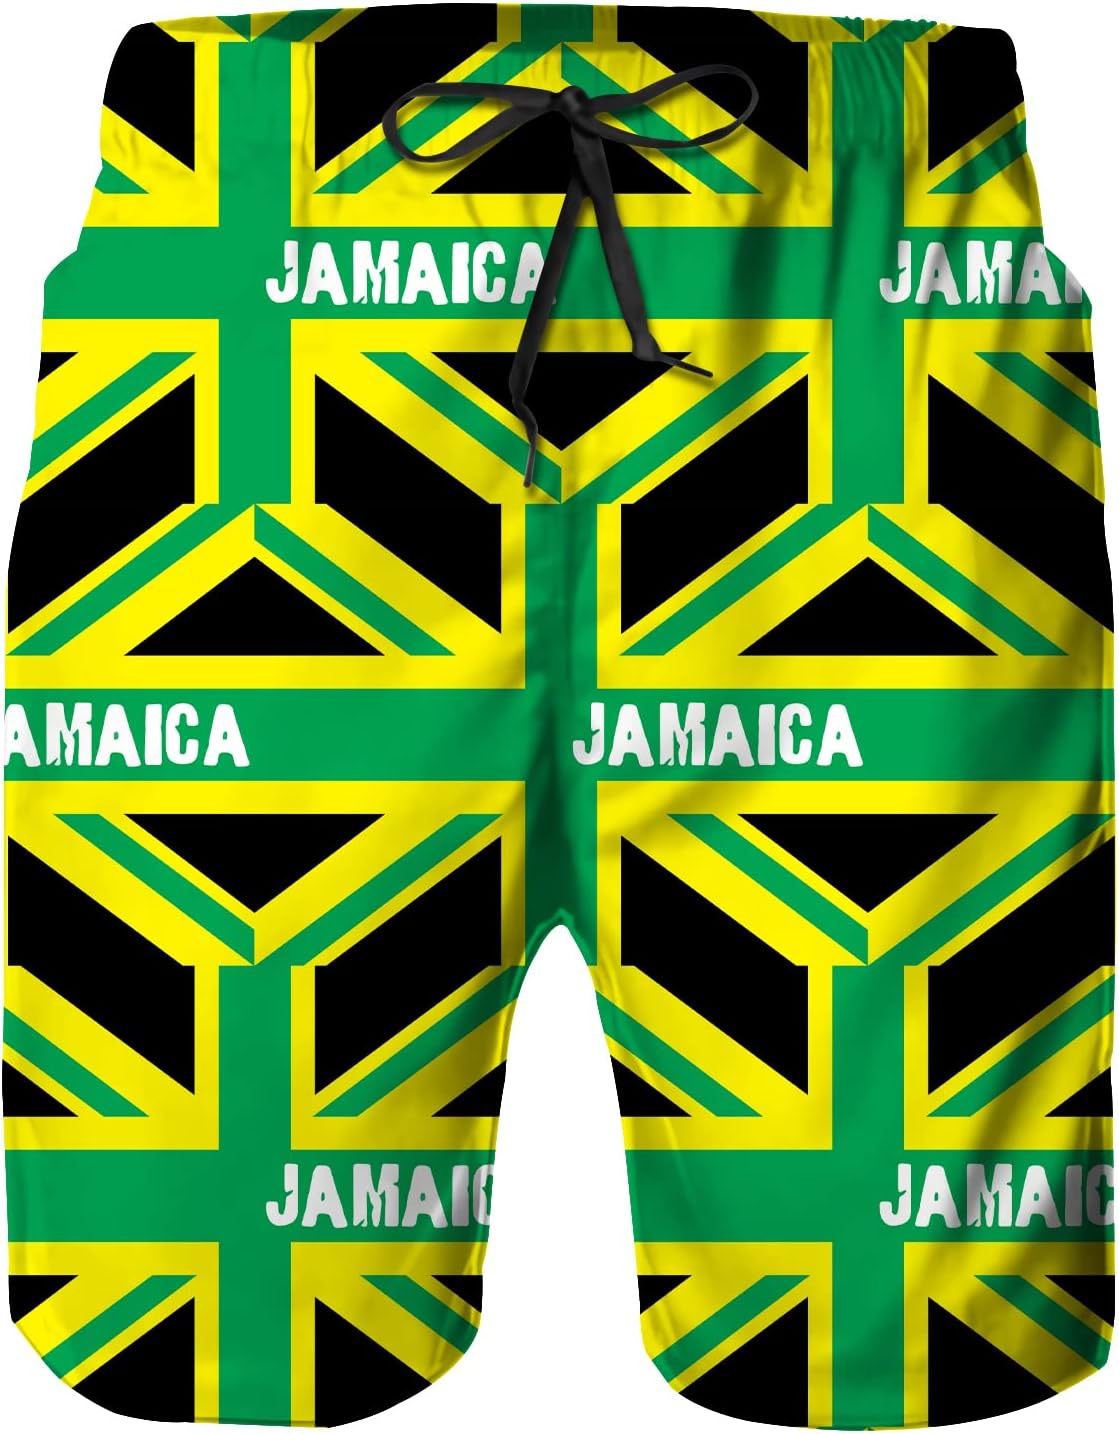 Jamaica Jamaican Kingdom Flag Men's Summer Beach Shorts, Athletic Trunks